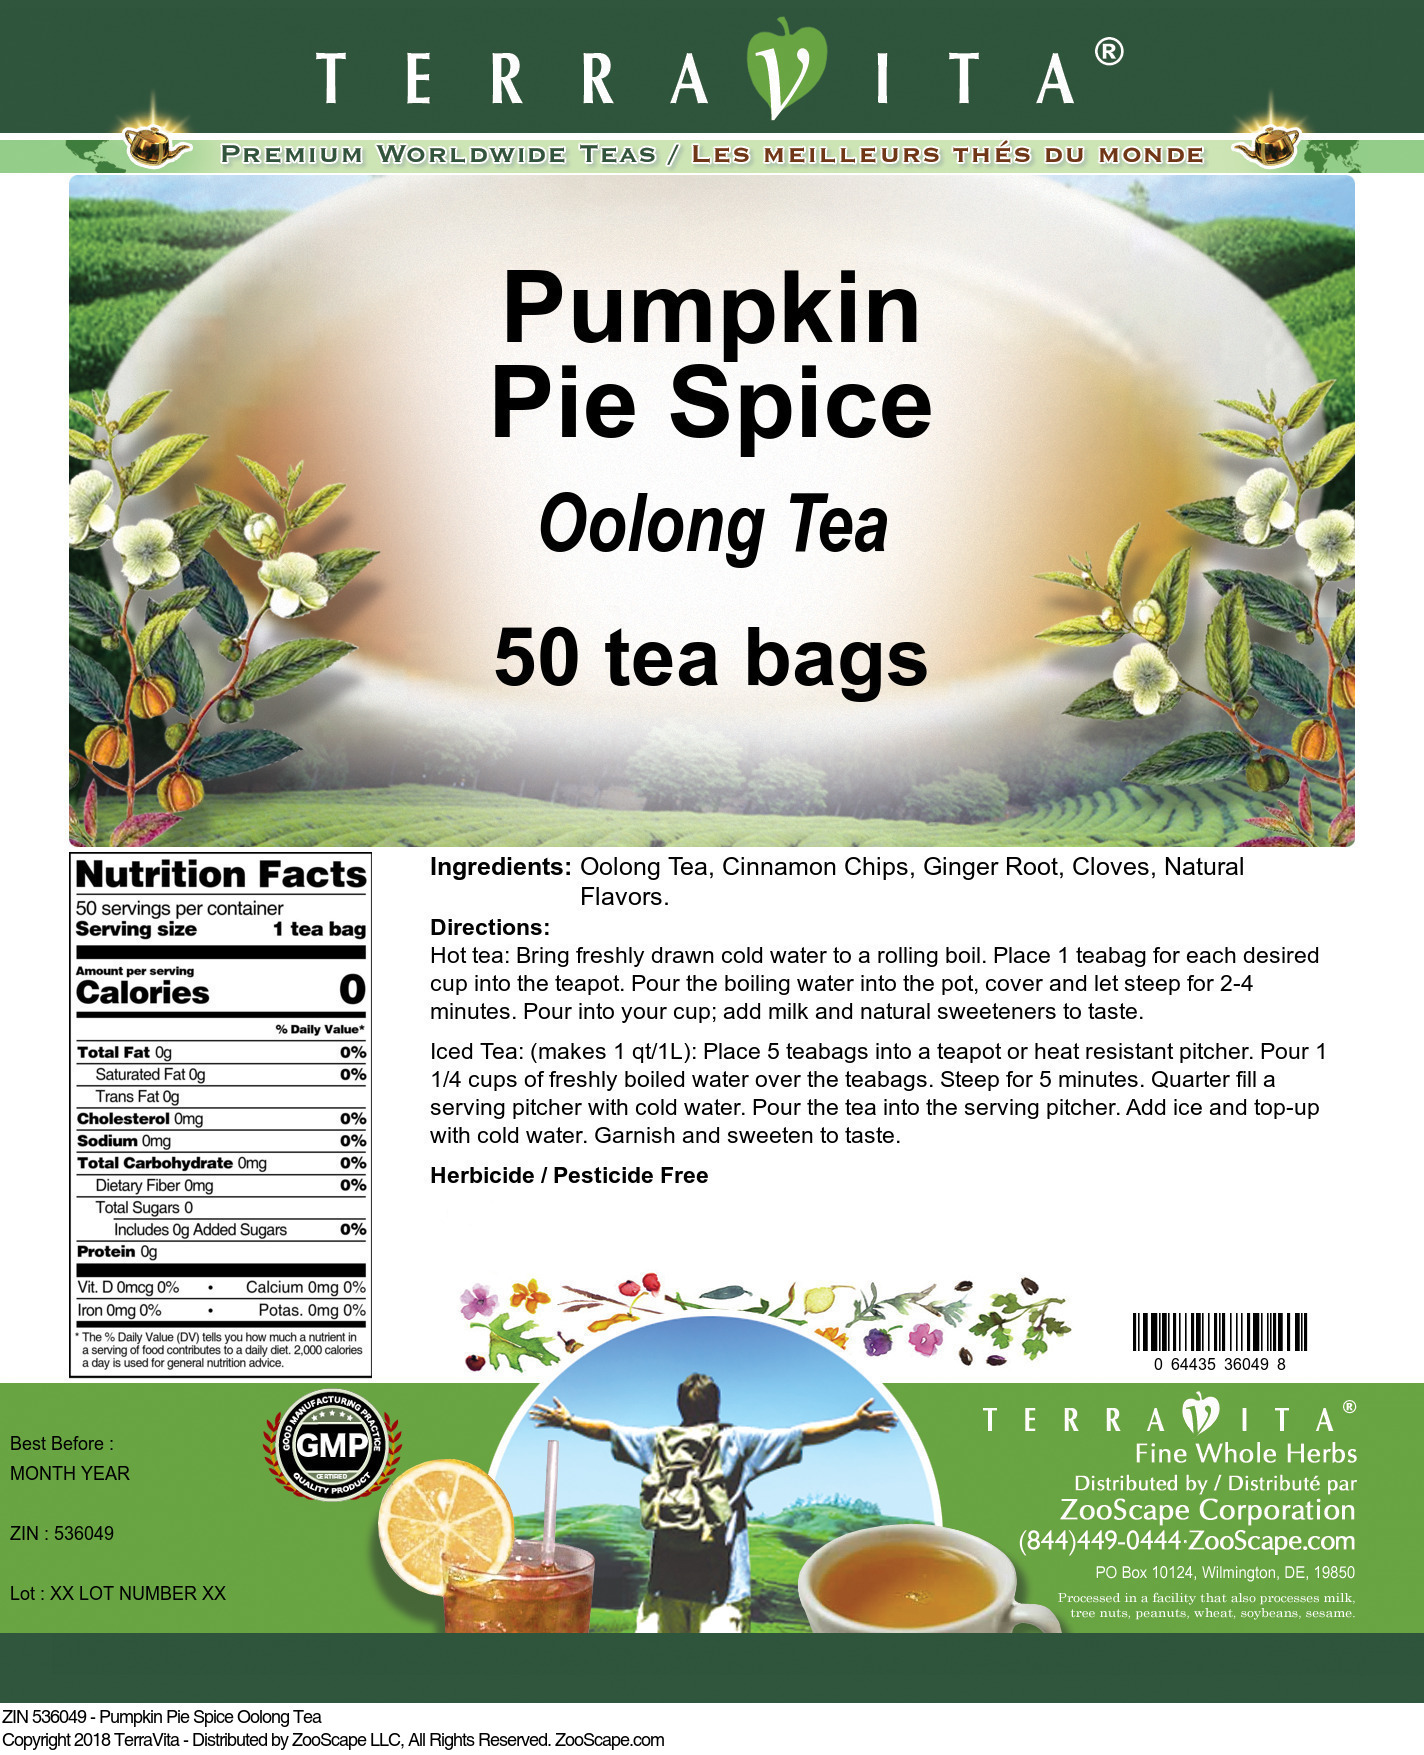 Pumpkin Pie Spice Oolong Tea - Label